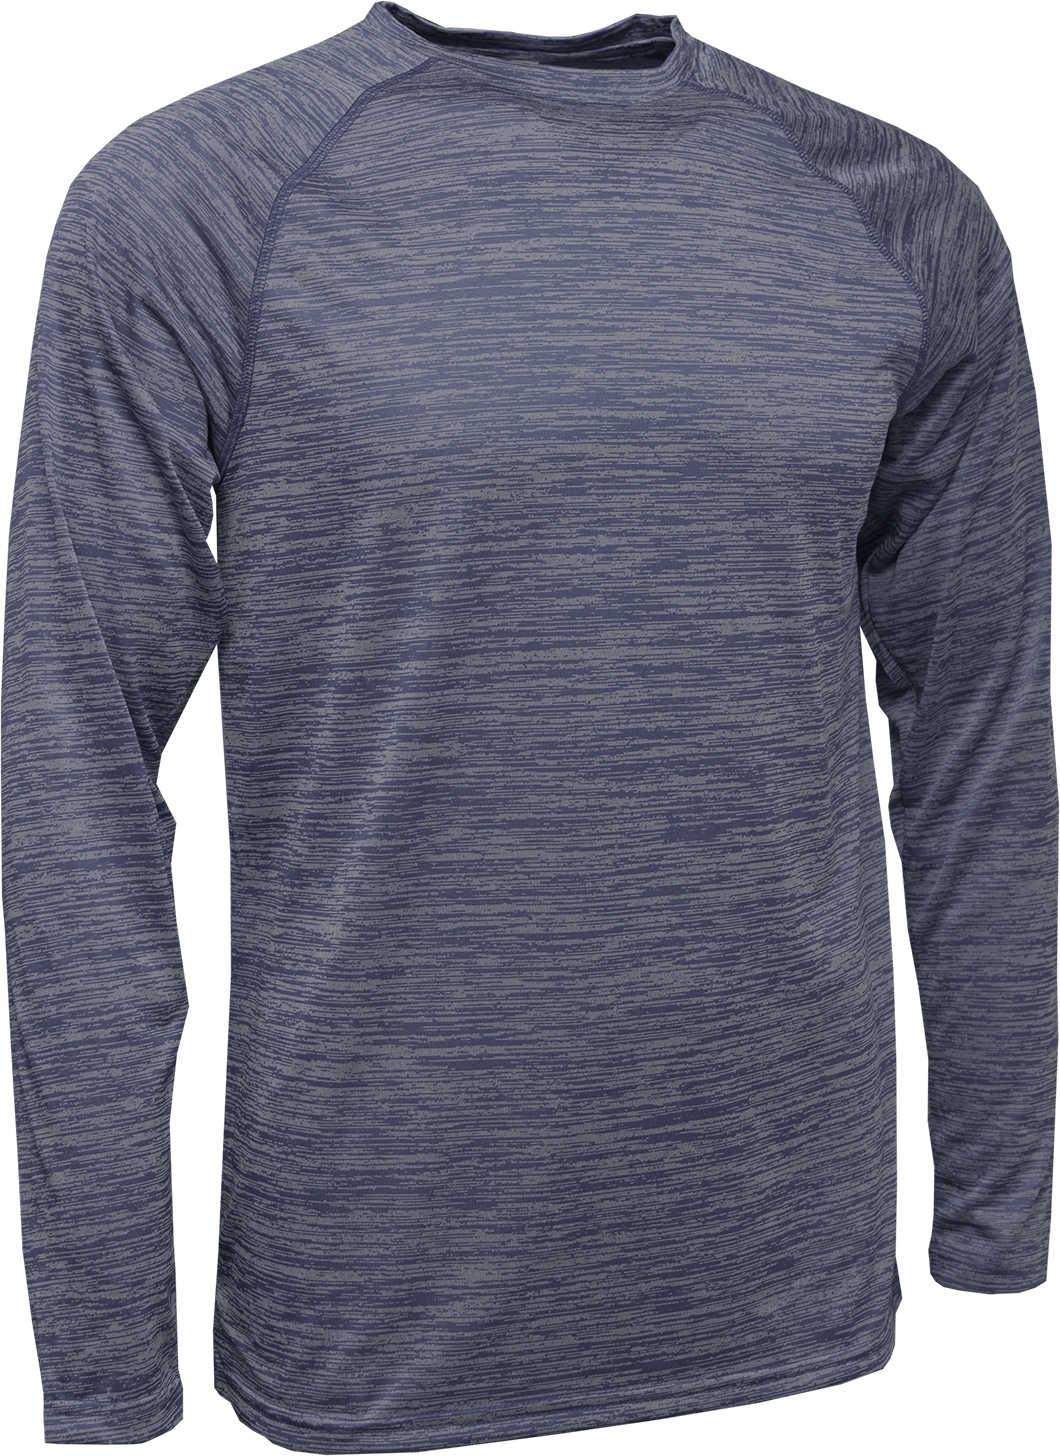 BAW Athletic Wear DT86 - Men's Dry-Tek Long Sleeve Shirt $9.75 - T-Shirts